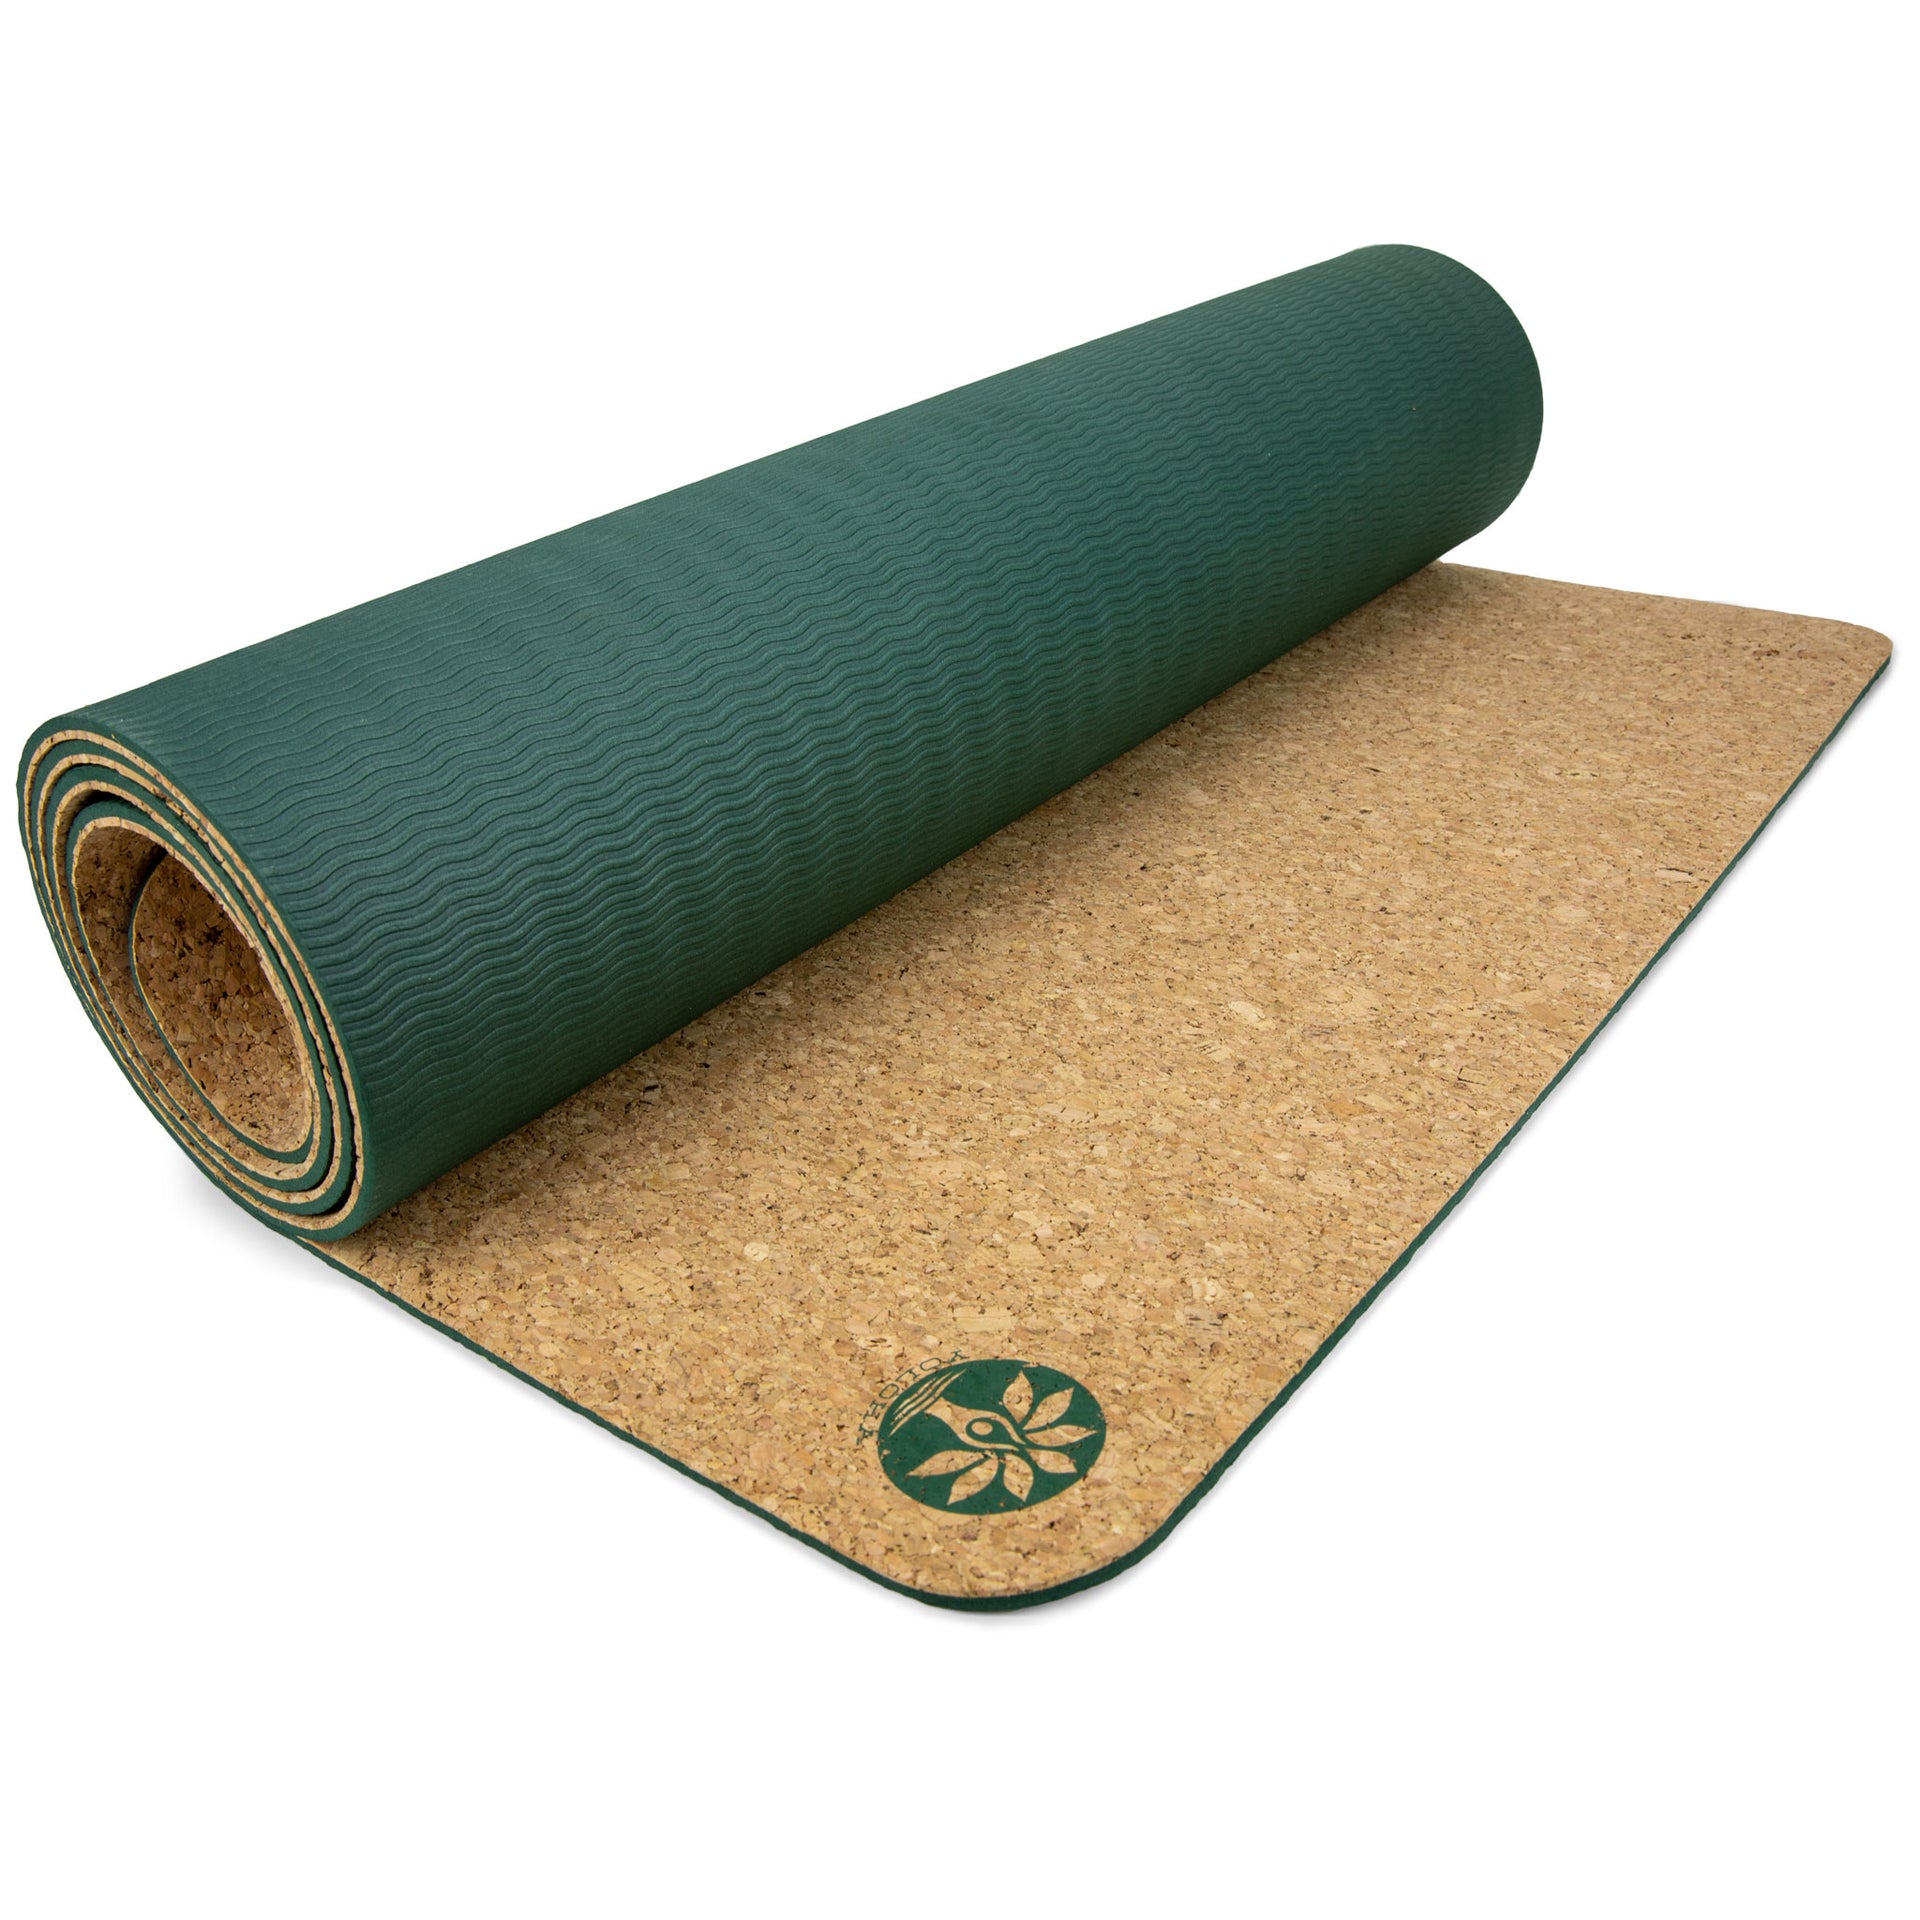 Local Business Yoloha Creates & Maintains World's First Eco-friendly Cork  Yoga Mat, Delmarvalife